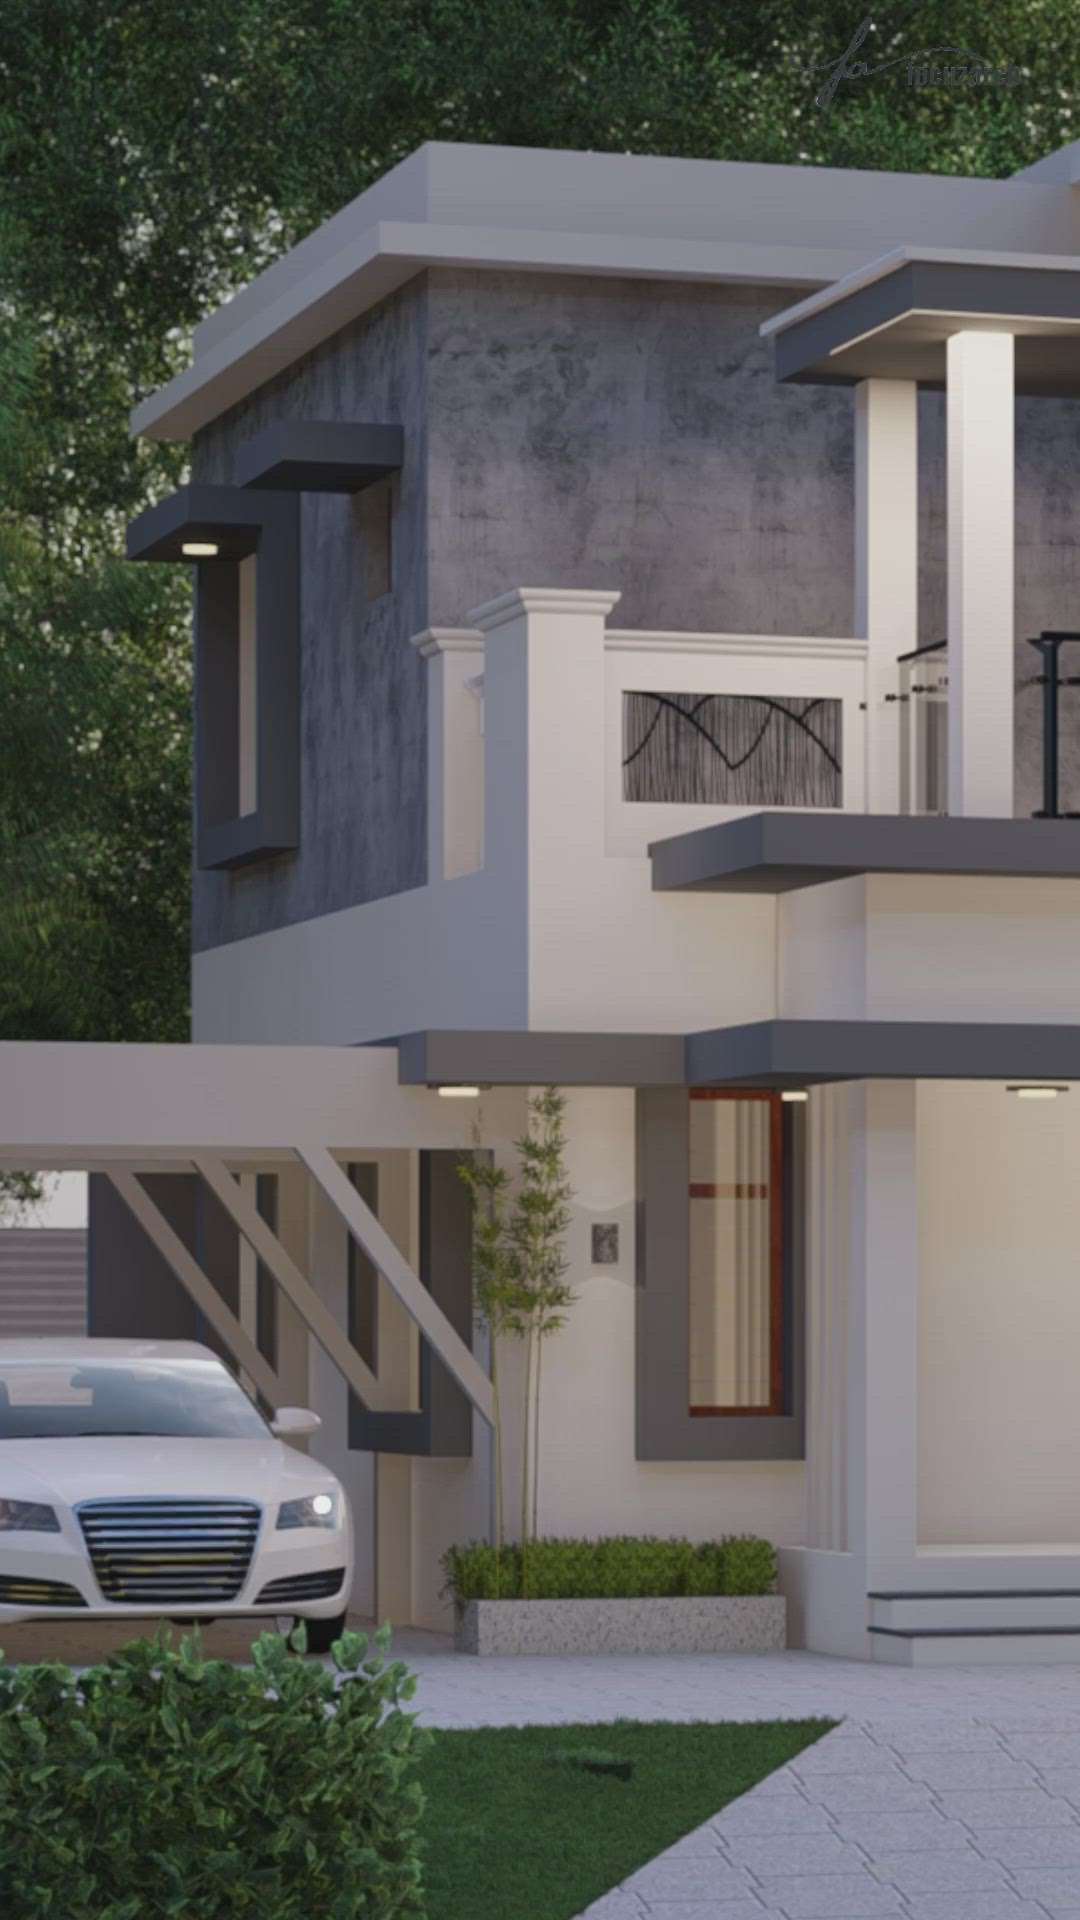 Kerala home design